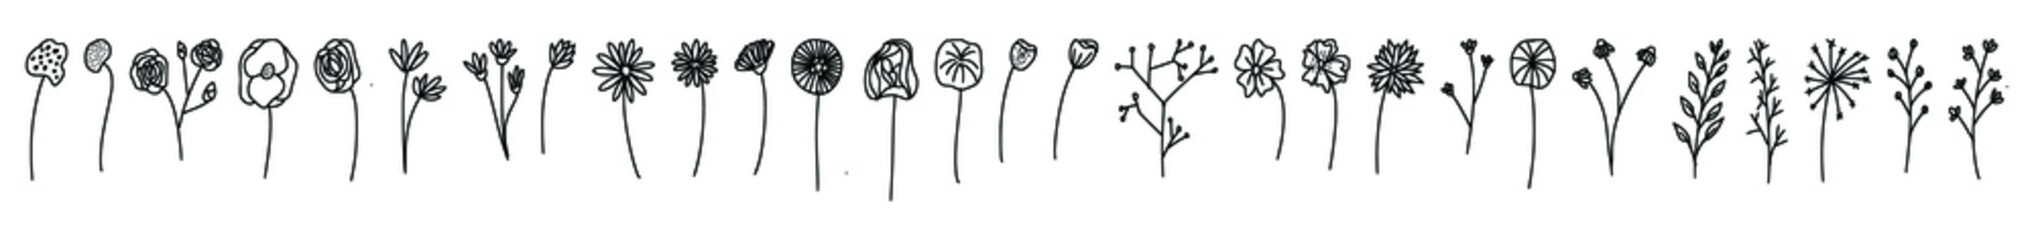 hand drawn plant illustration